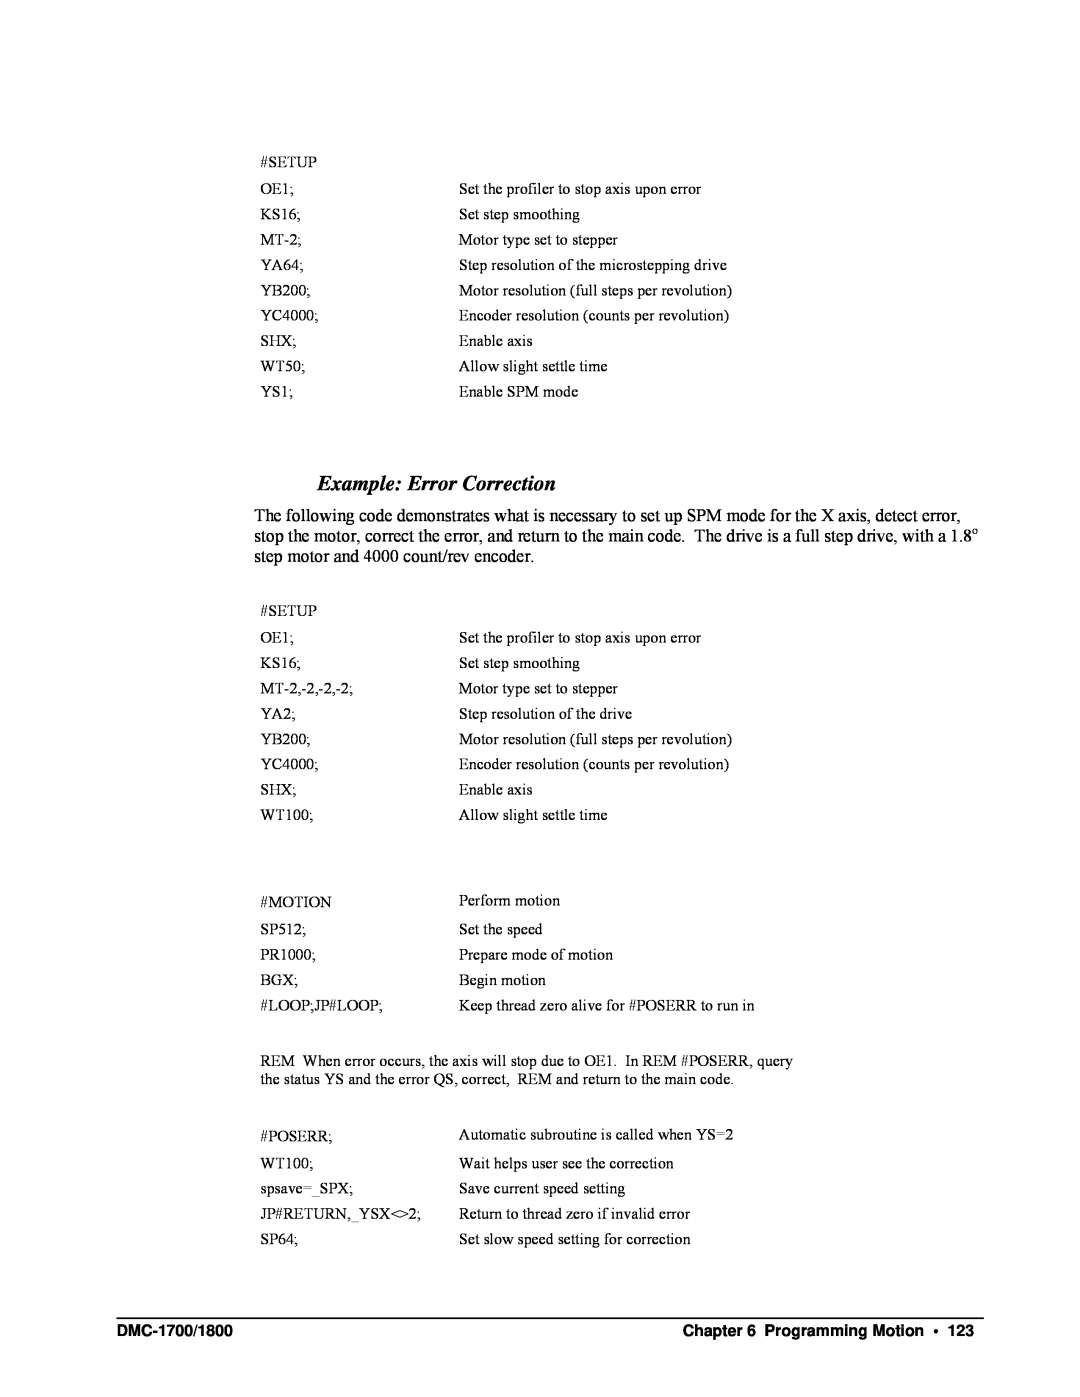 Galil DMC-1800 user manual Example Error Correction, DMC-1700/1800, Programming Motion • 